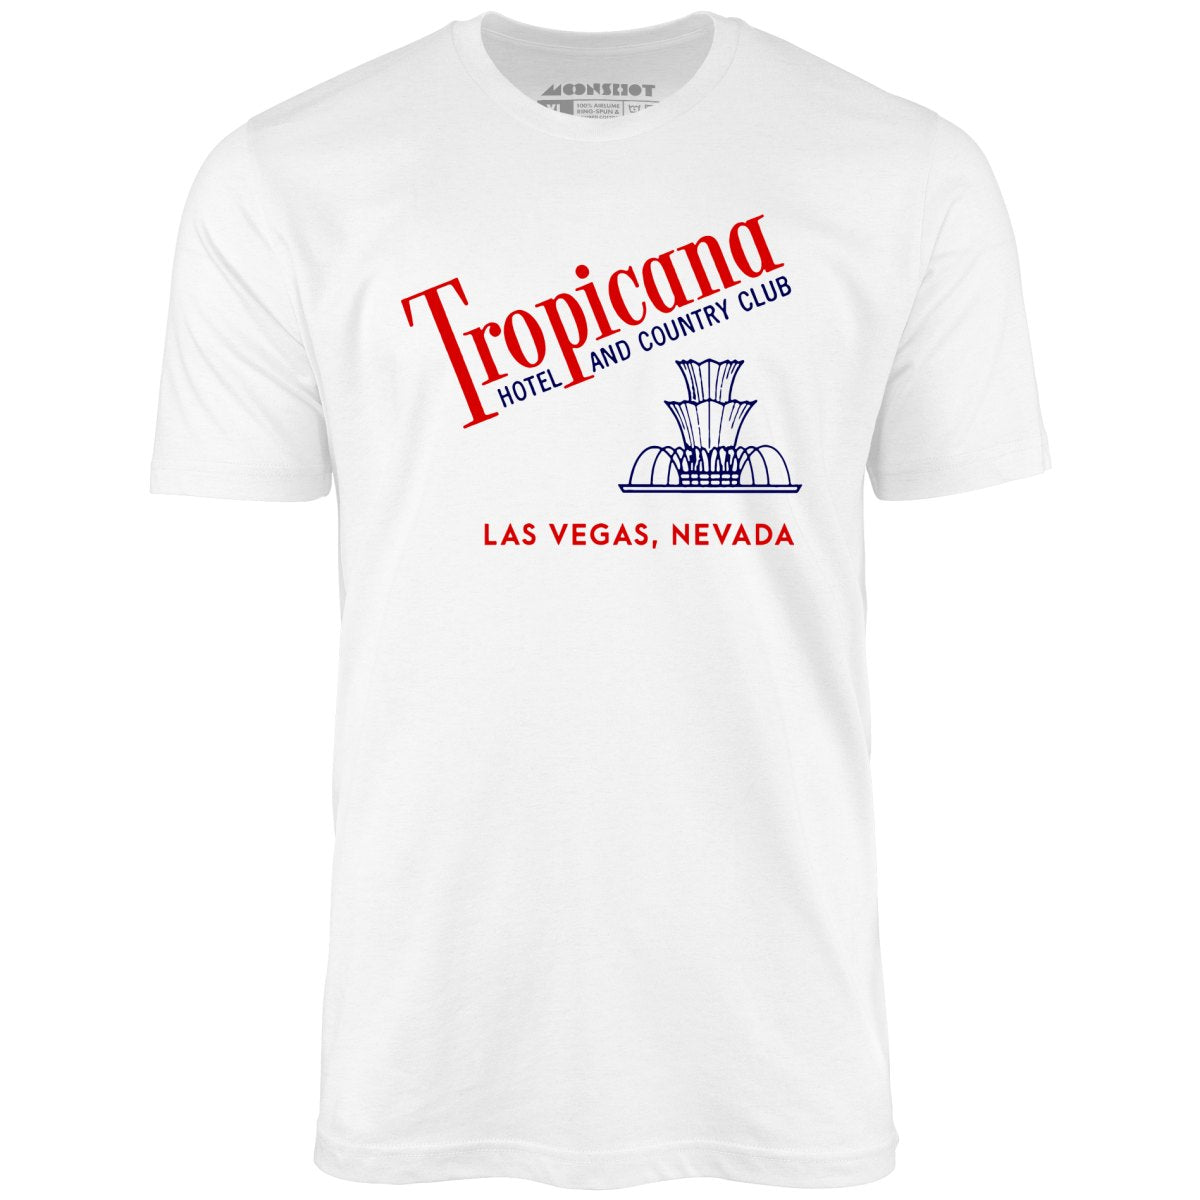 Tropicana Hotel and Country Club - Vintage Las Vegas - Unisex T-Shirt